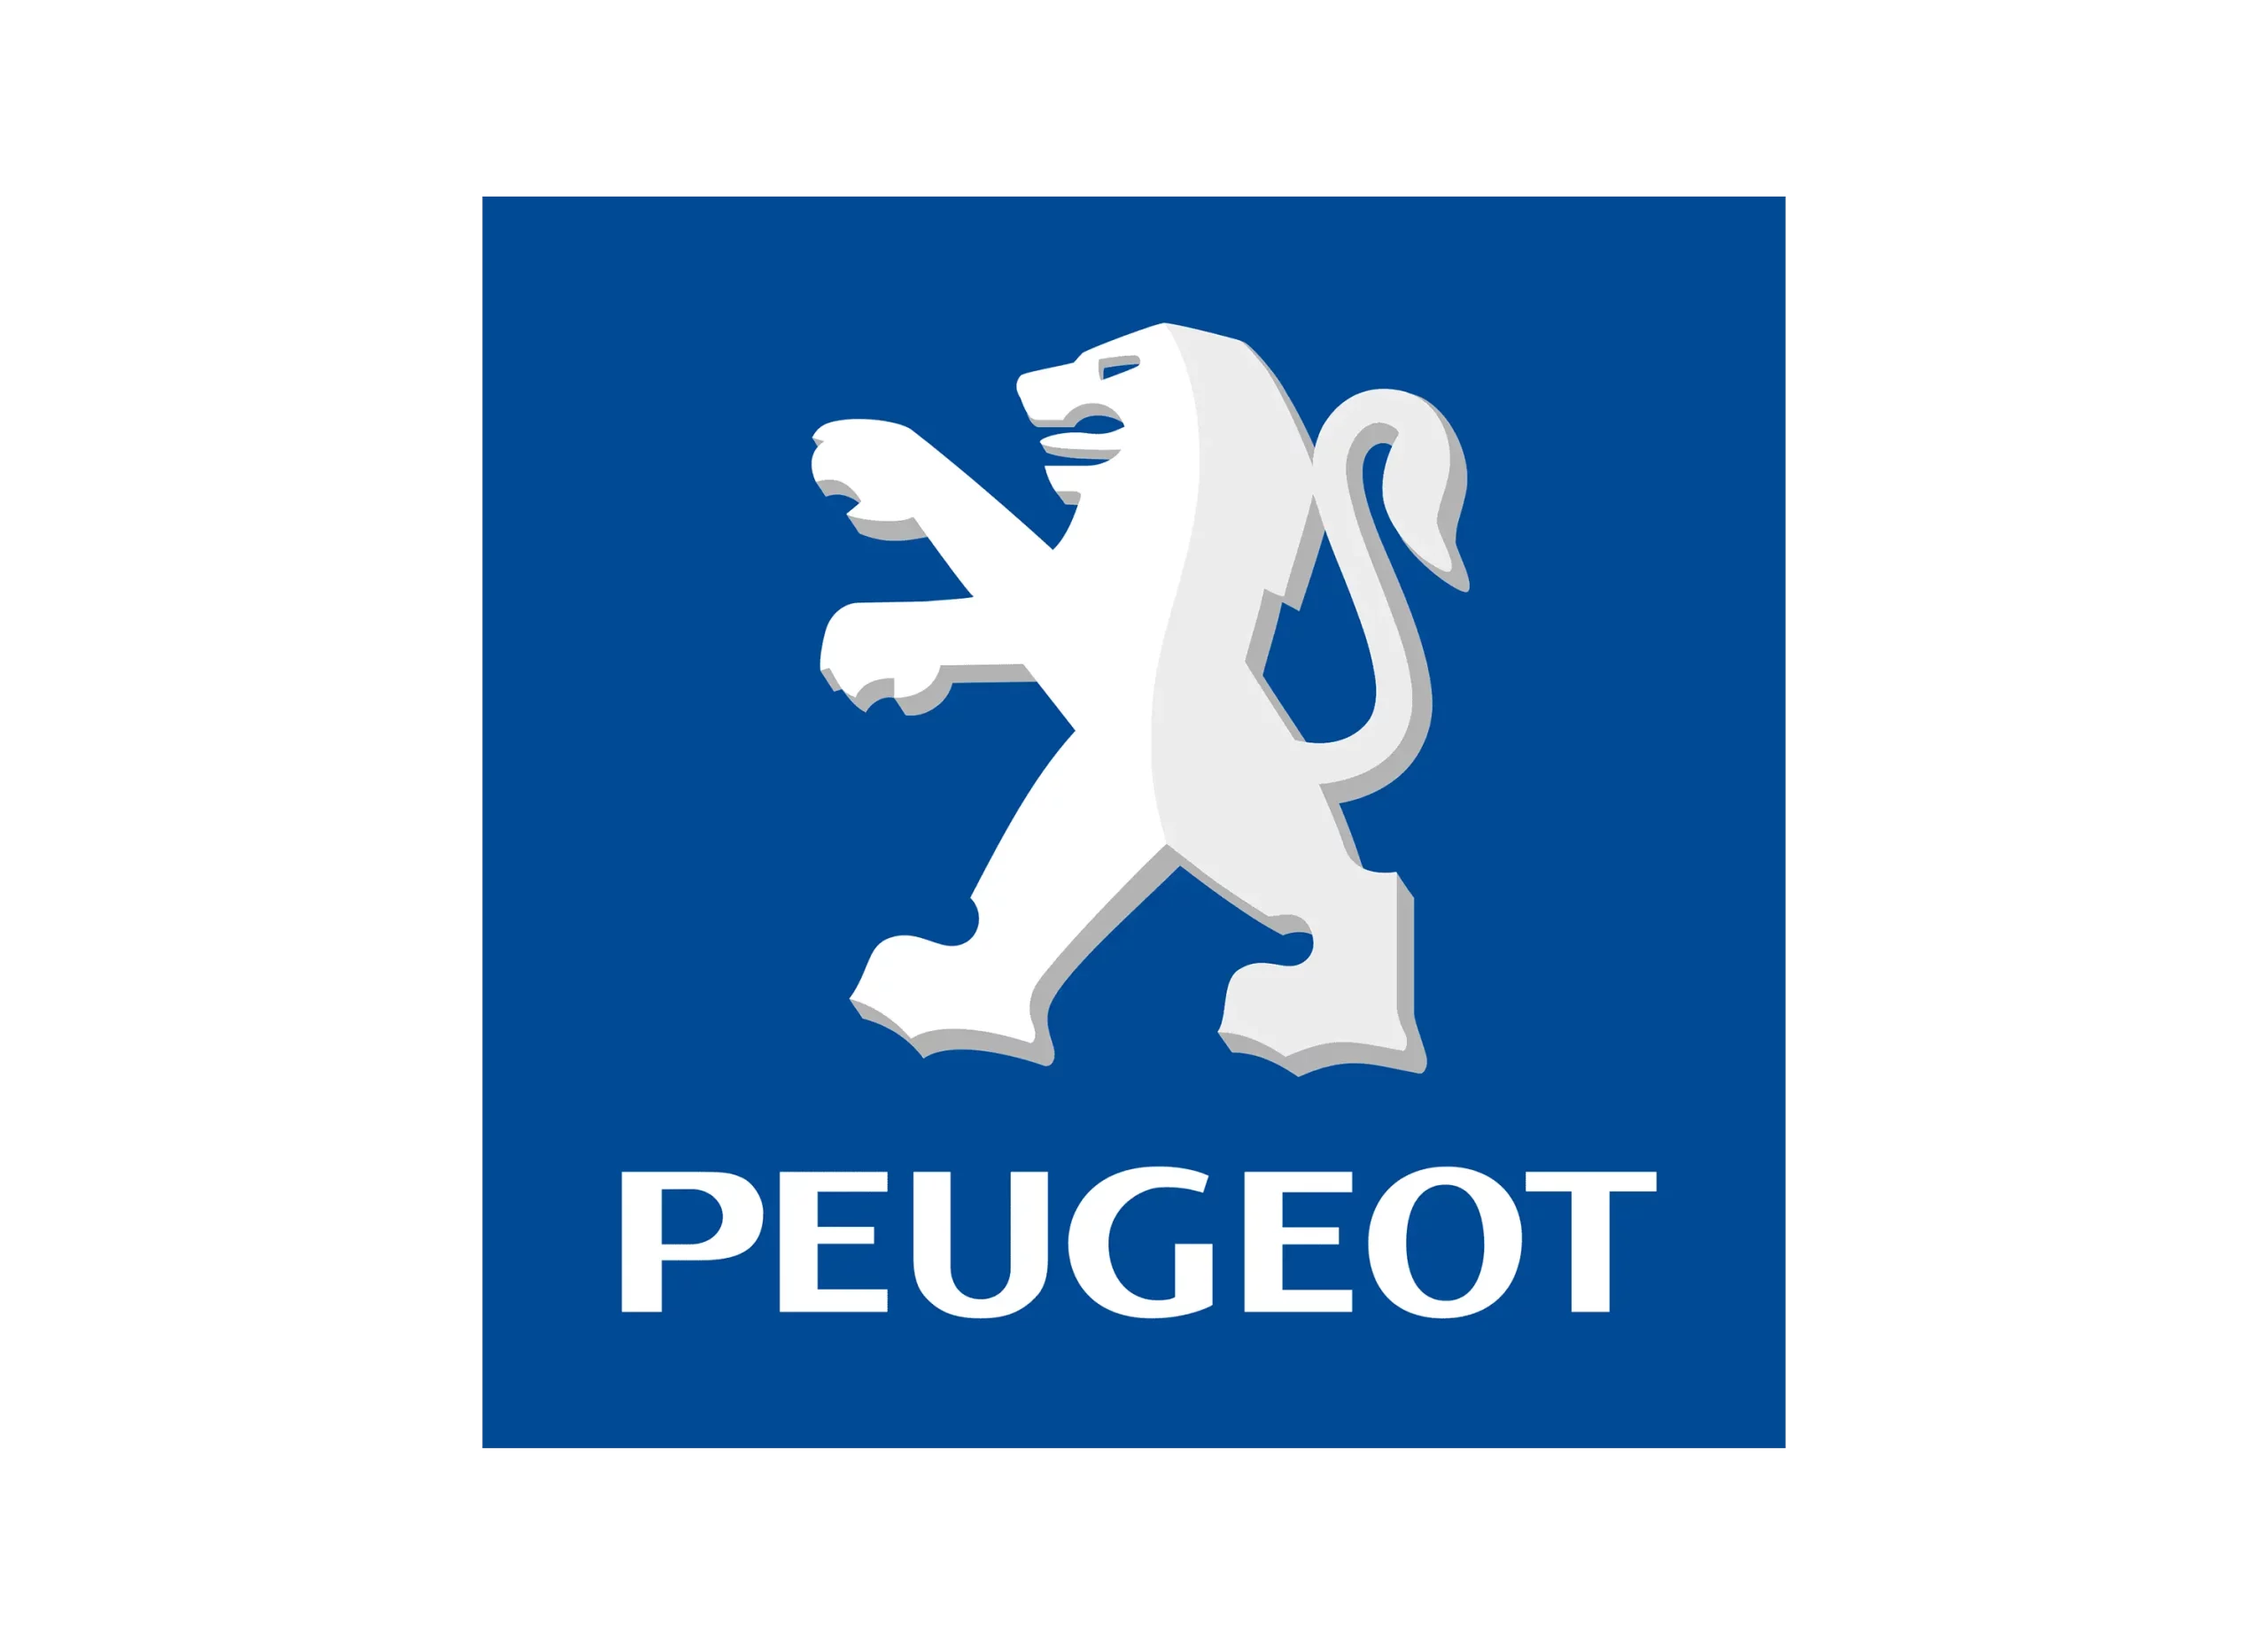 Peugeot logo 2002-2010